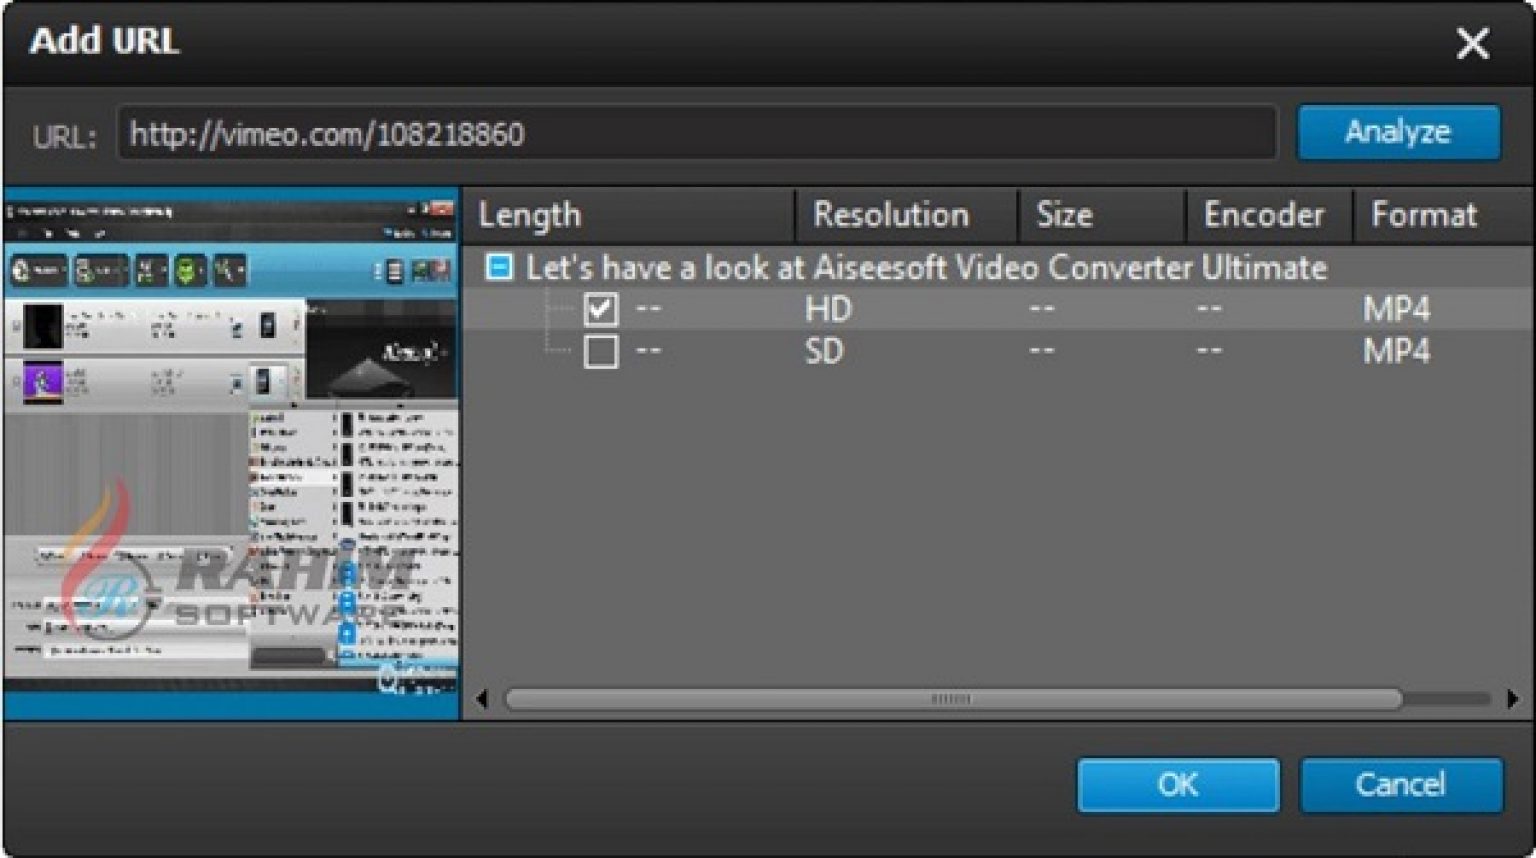 aiseesoft video converter ultimate